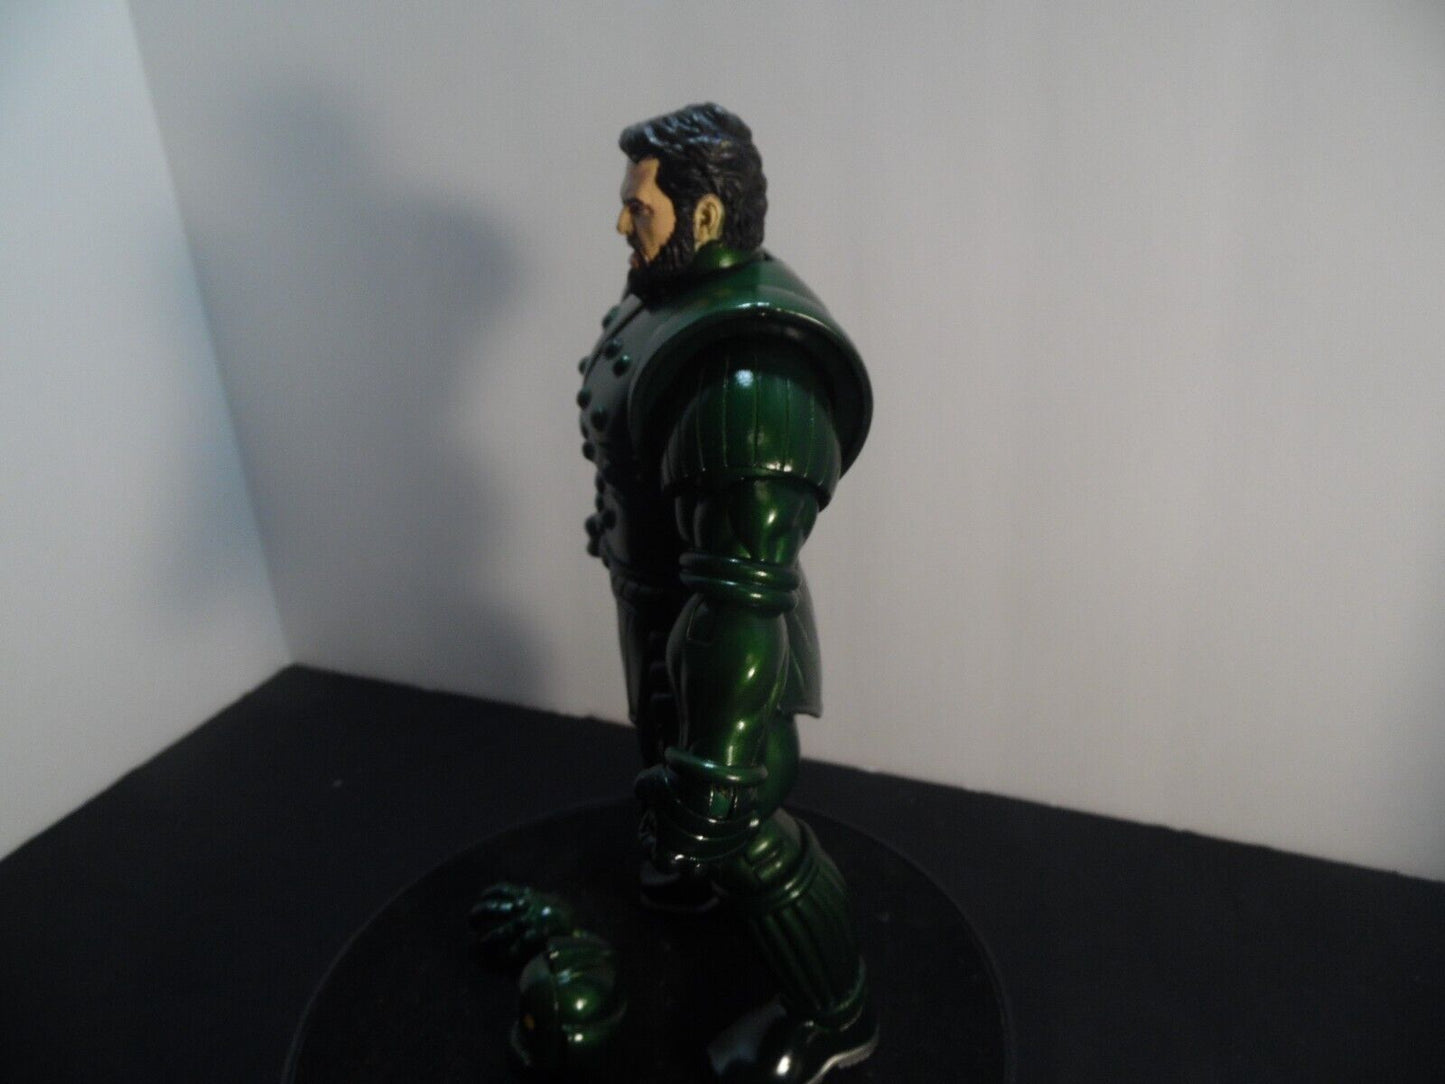 Diamond Select Toys Marvel Select: Titanium Man Action Figure